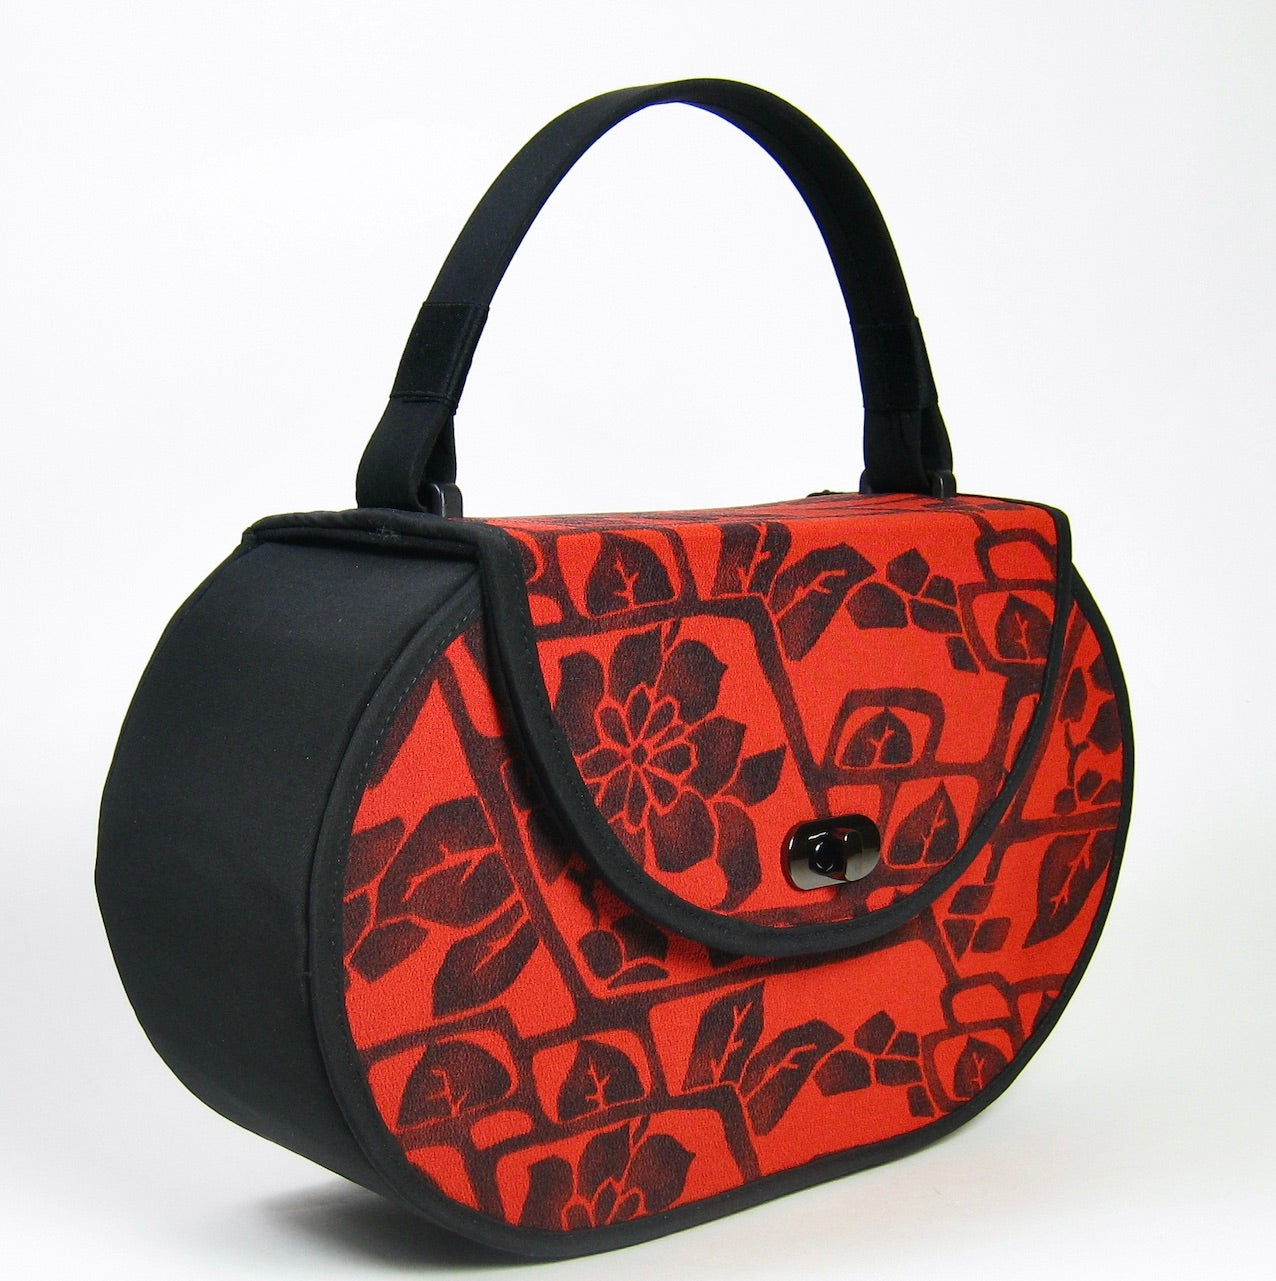 Oval Handbag - Black and Red Patterned